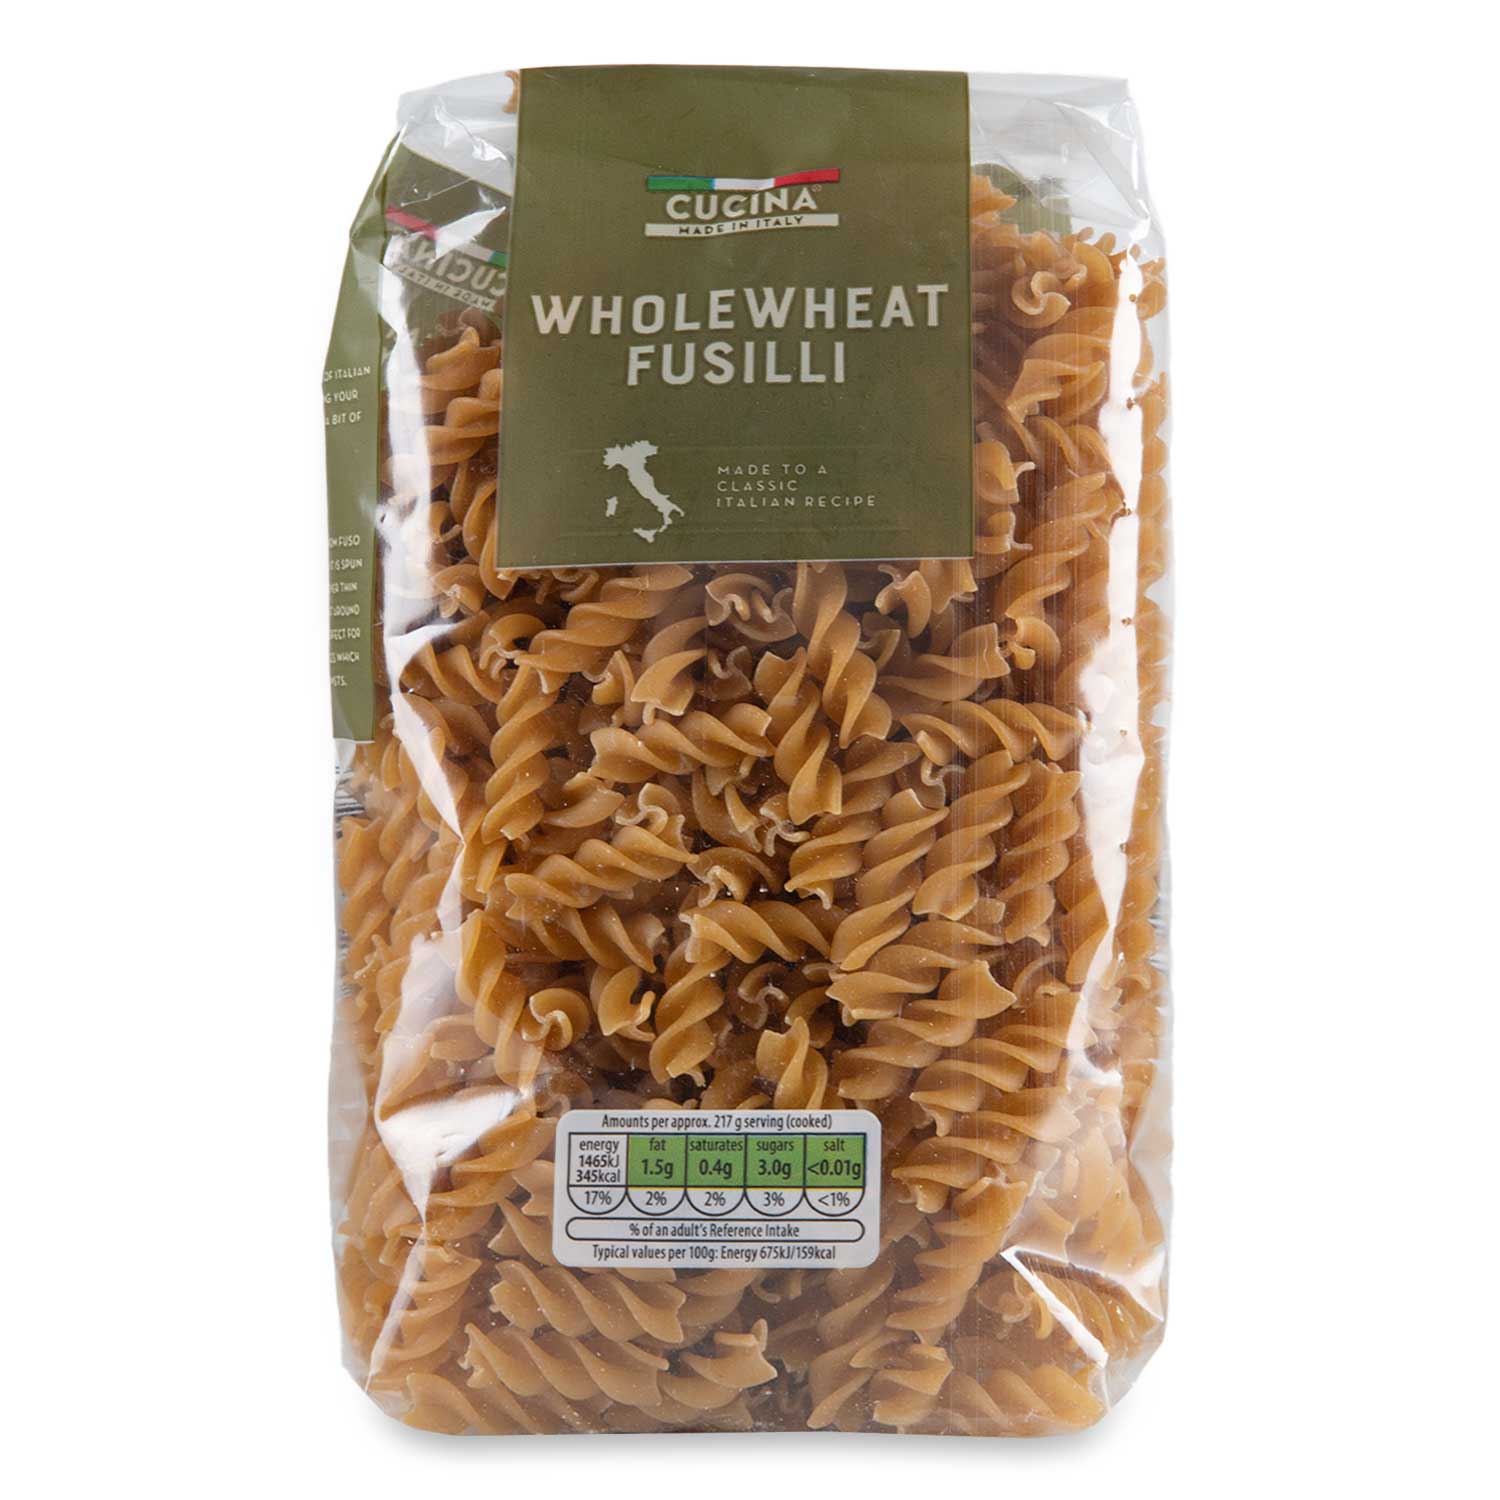 Cucina Wholewheat Fusilli 500g | ALDI